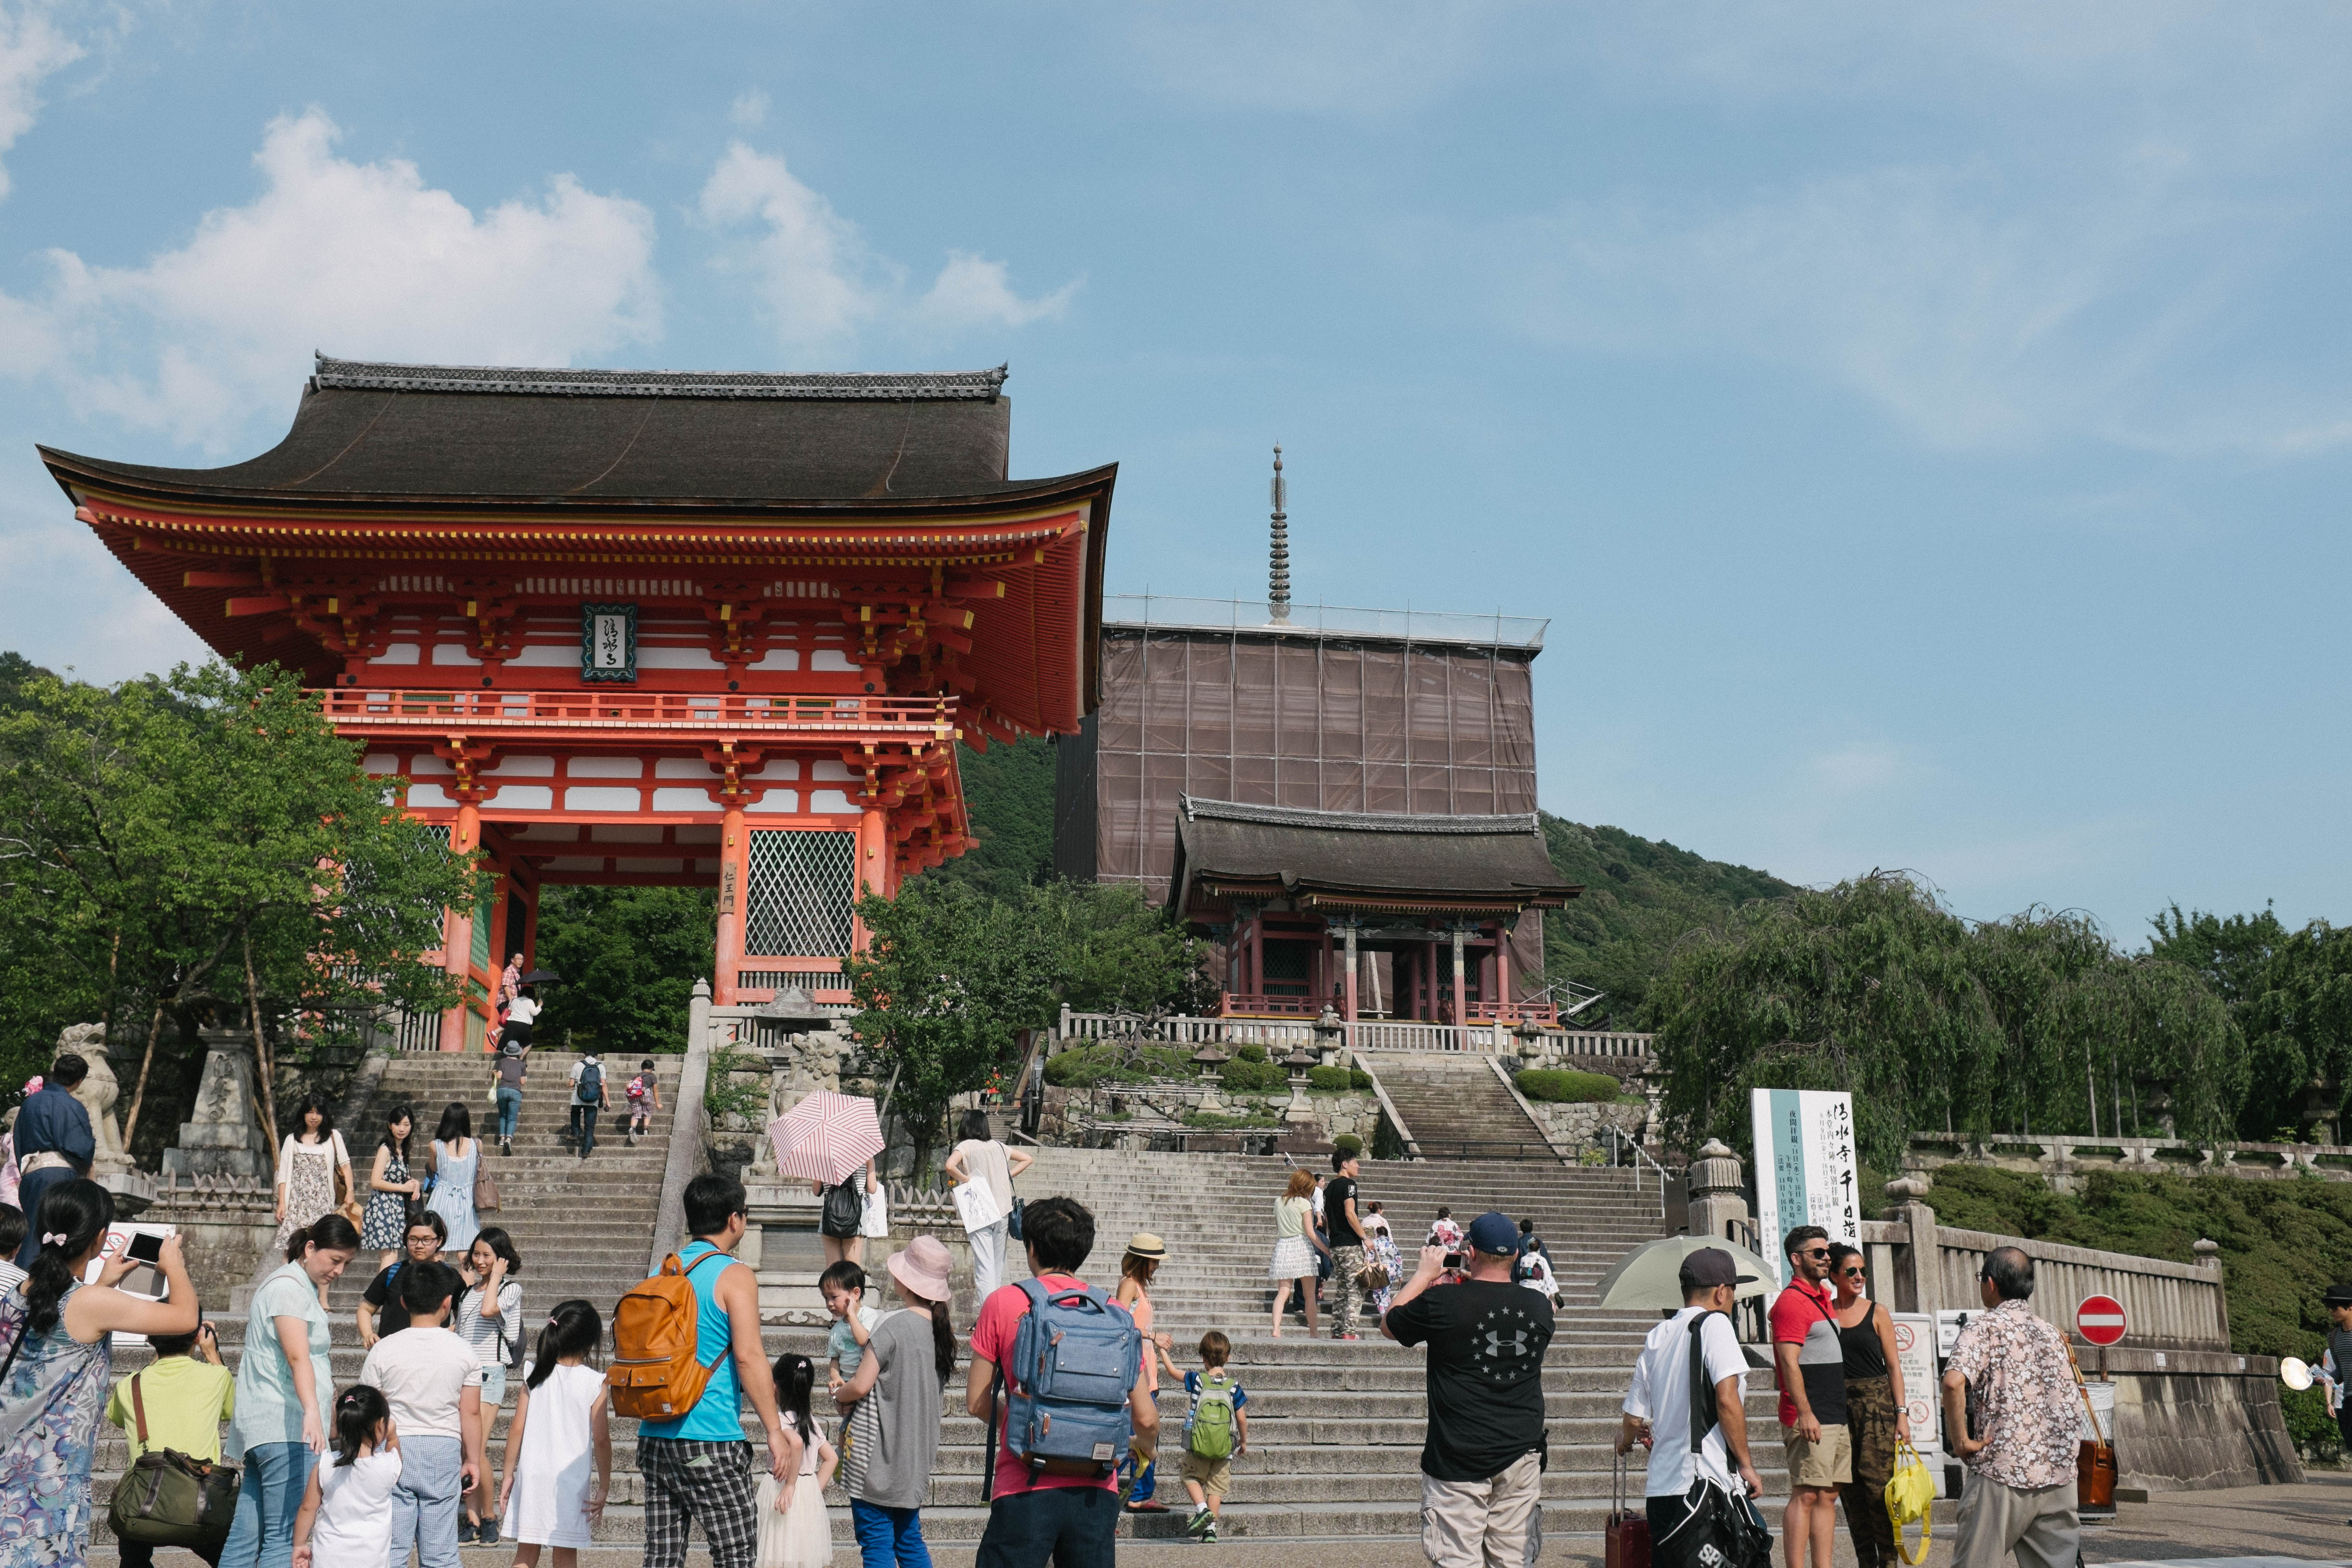 the entrance to kiyomizu-dera.